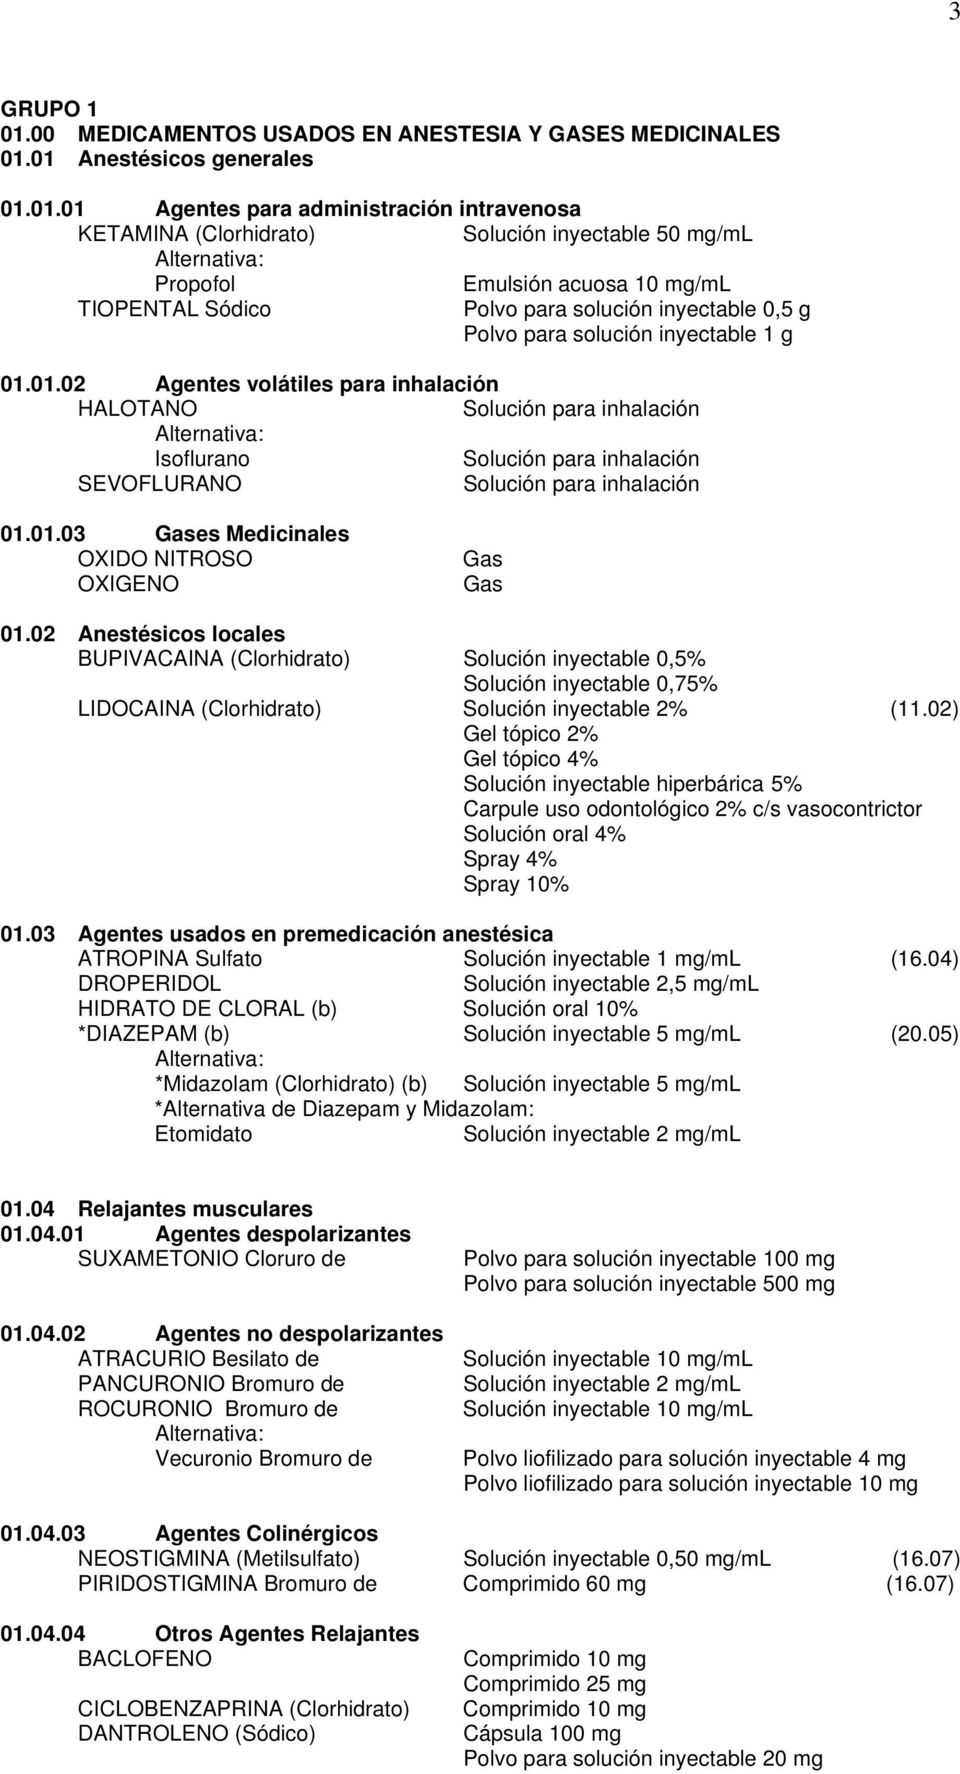 02 Anestésicos locales BUPIVACAINA (Clorhidrato) Solución inyectable 0,5% Solución inyectable 0,75% LIDOCAINA (Clorhidrato) Solución inyectable 2% (11.